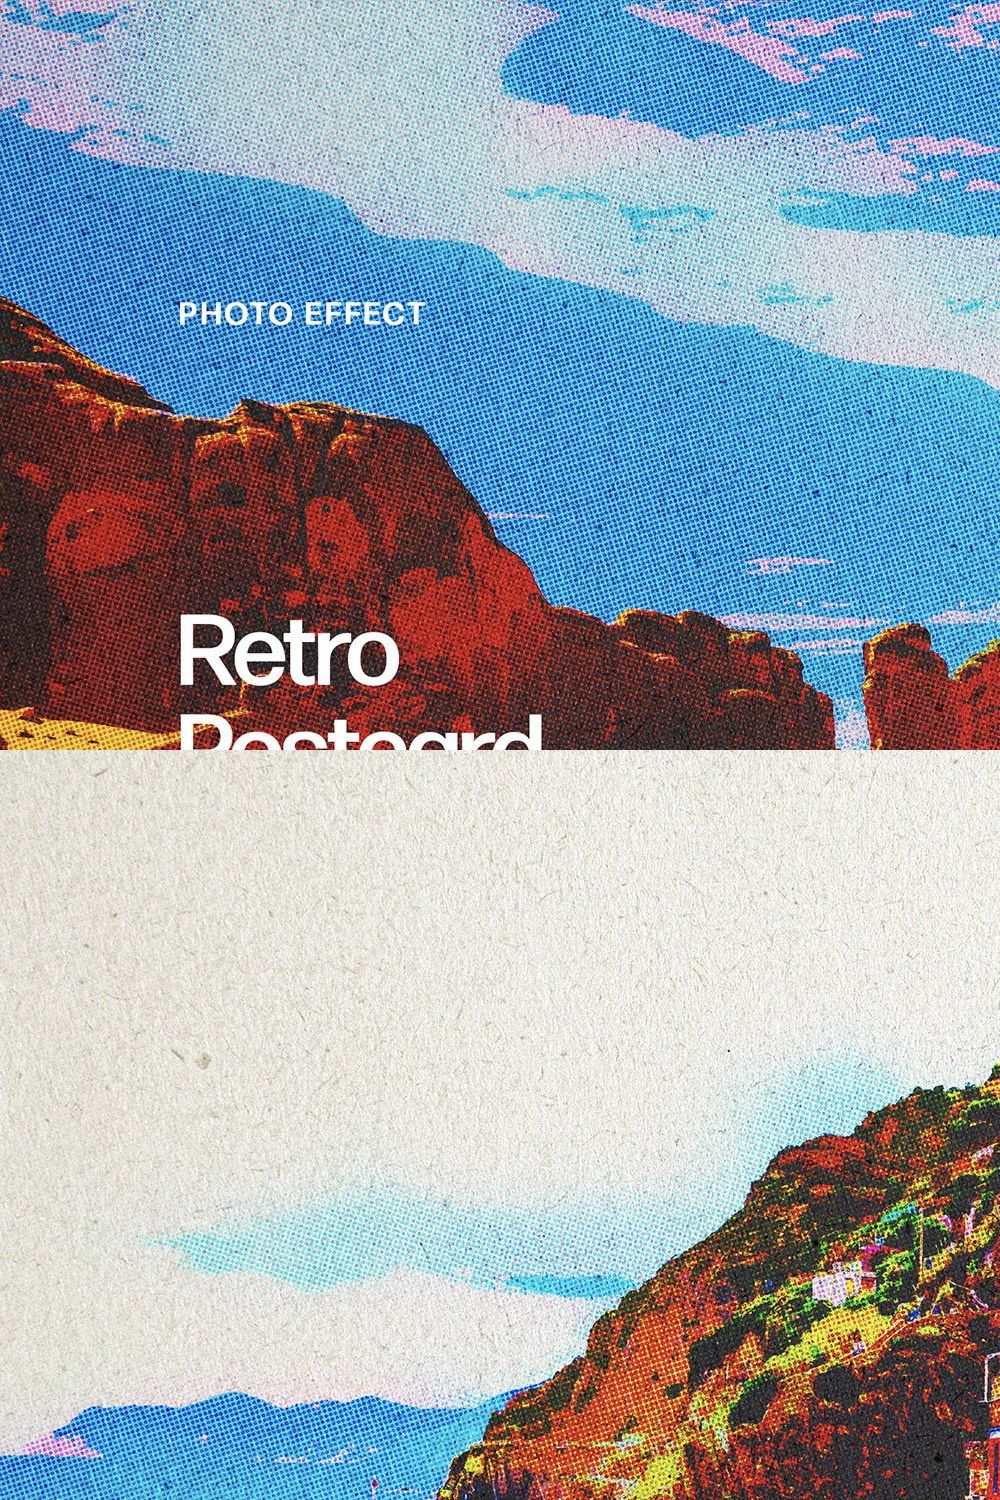 Retro Postcard Effect pinterest preview image.